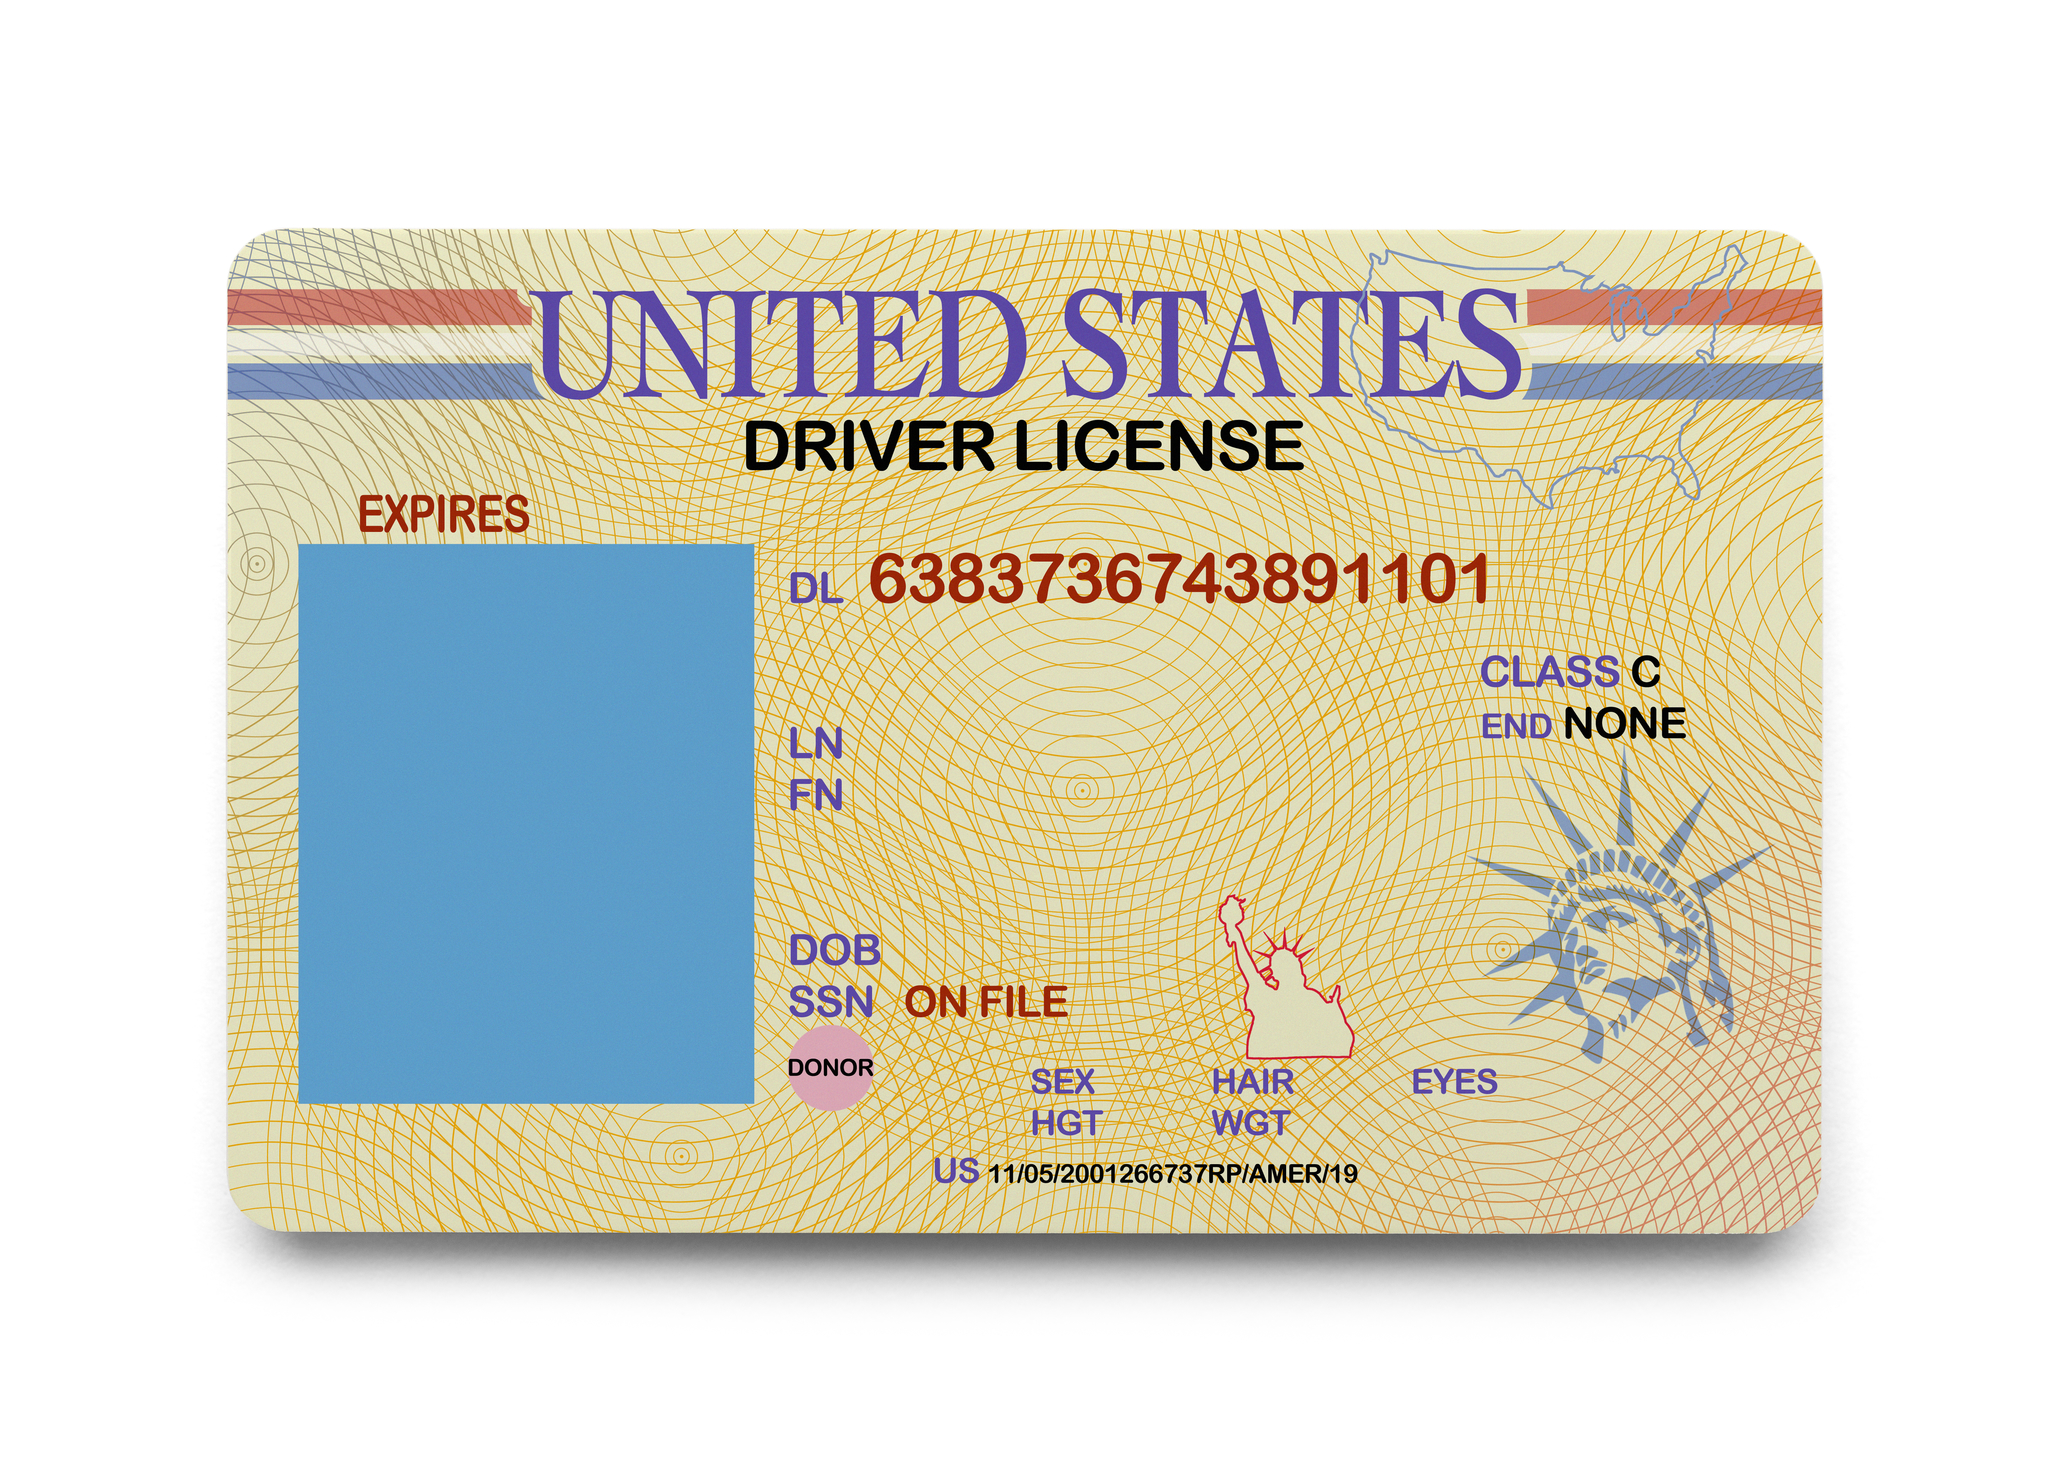 Pennsylvania Democrats Propose New Bill for Undocumented Immigrants to Obtain Driver’s License